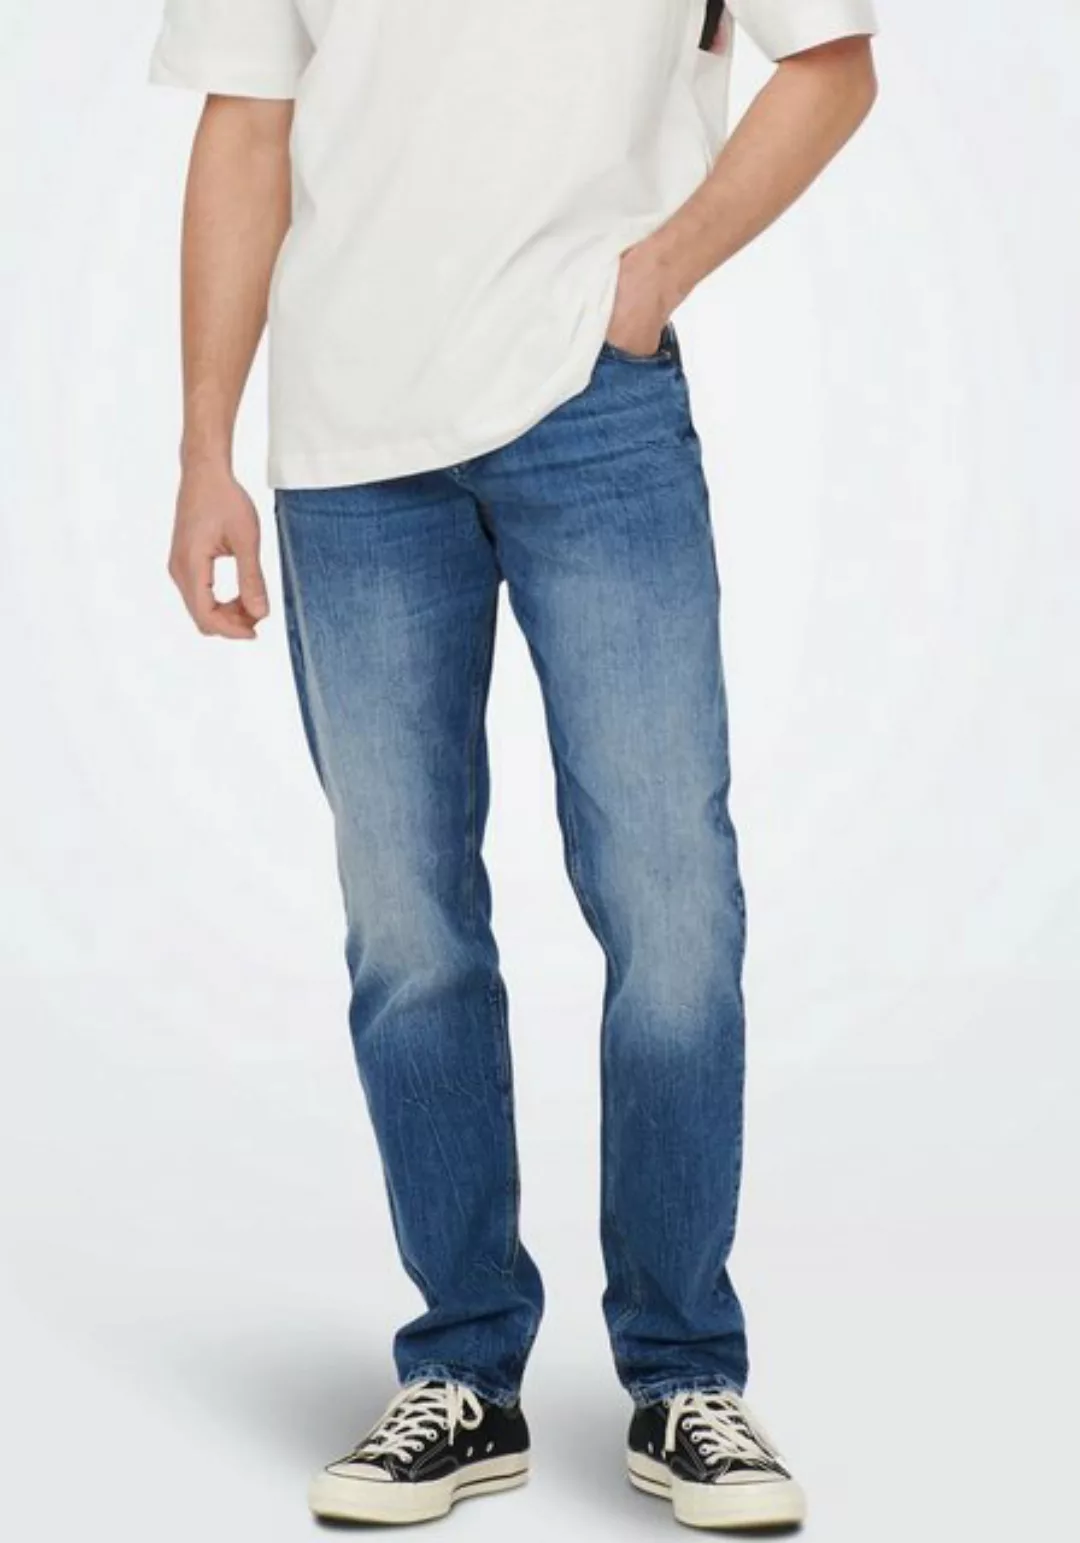 Only & Sons Herren Jeans ONSAVI COMFORT 4935 - Relaxed Fit - Blau - Dark Me günstig online kaufen